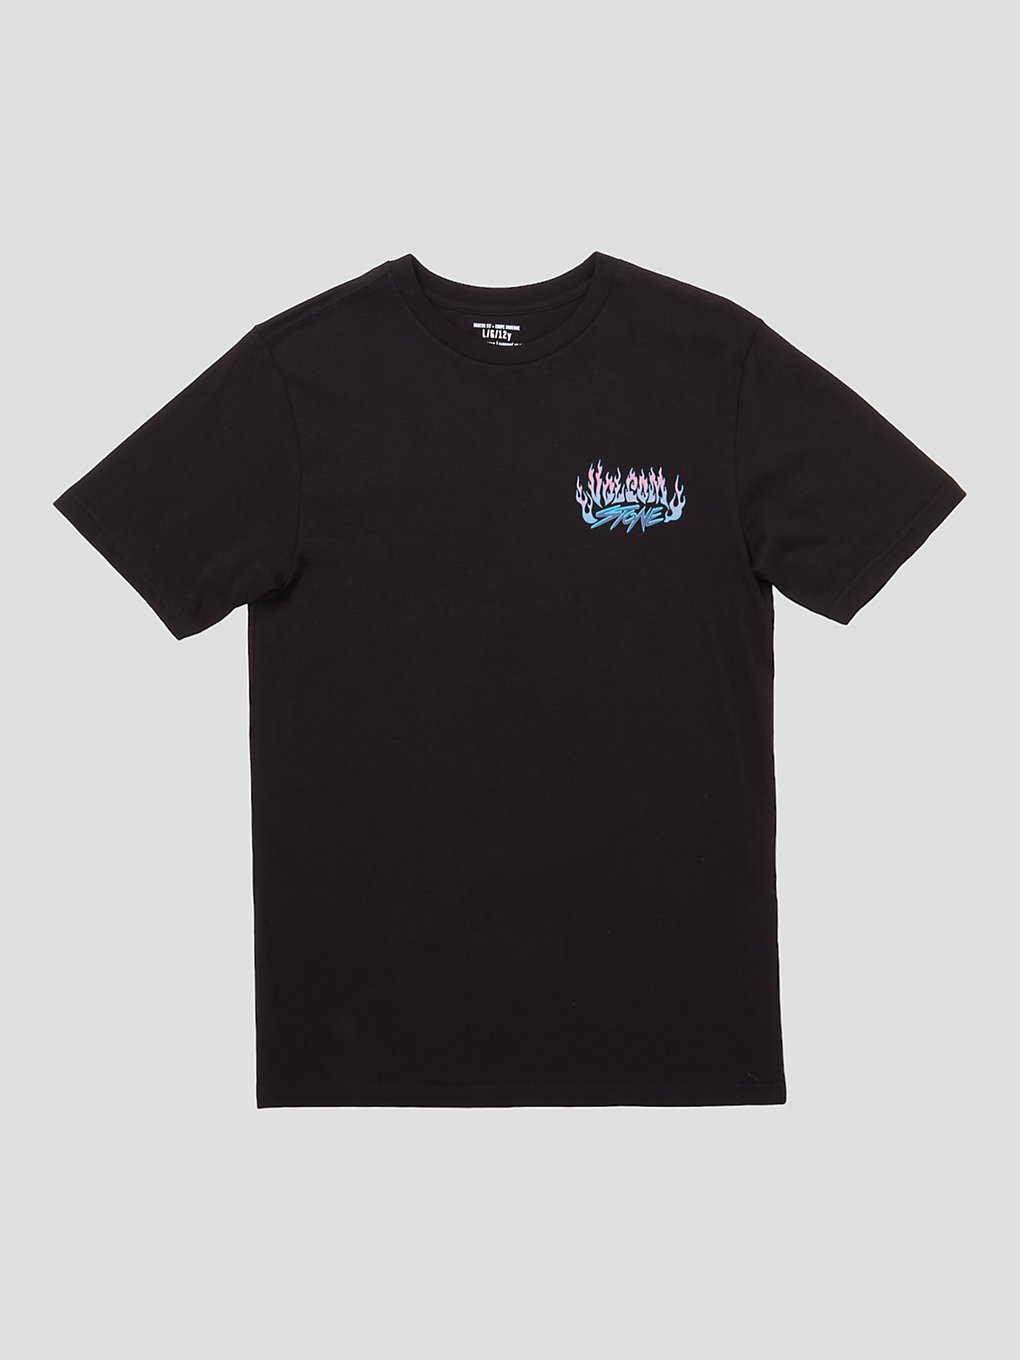 volcom trux t-shirt black